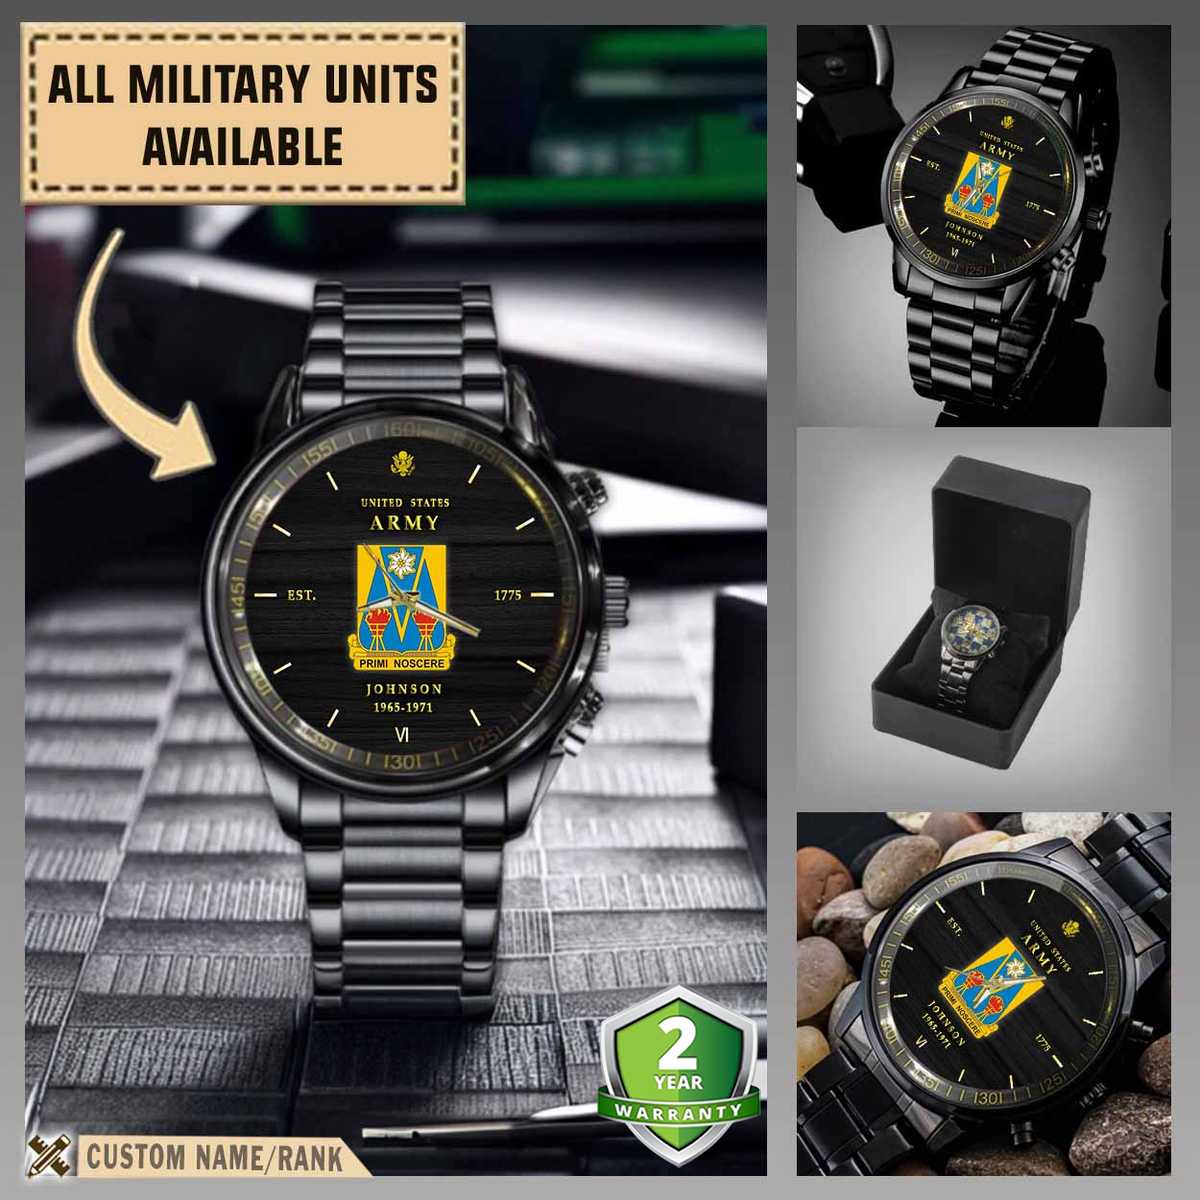 303rd mi bn 303rd military intelligence battalionmilitary black wrist watch